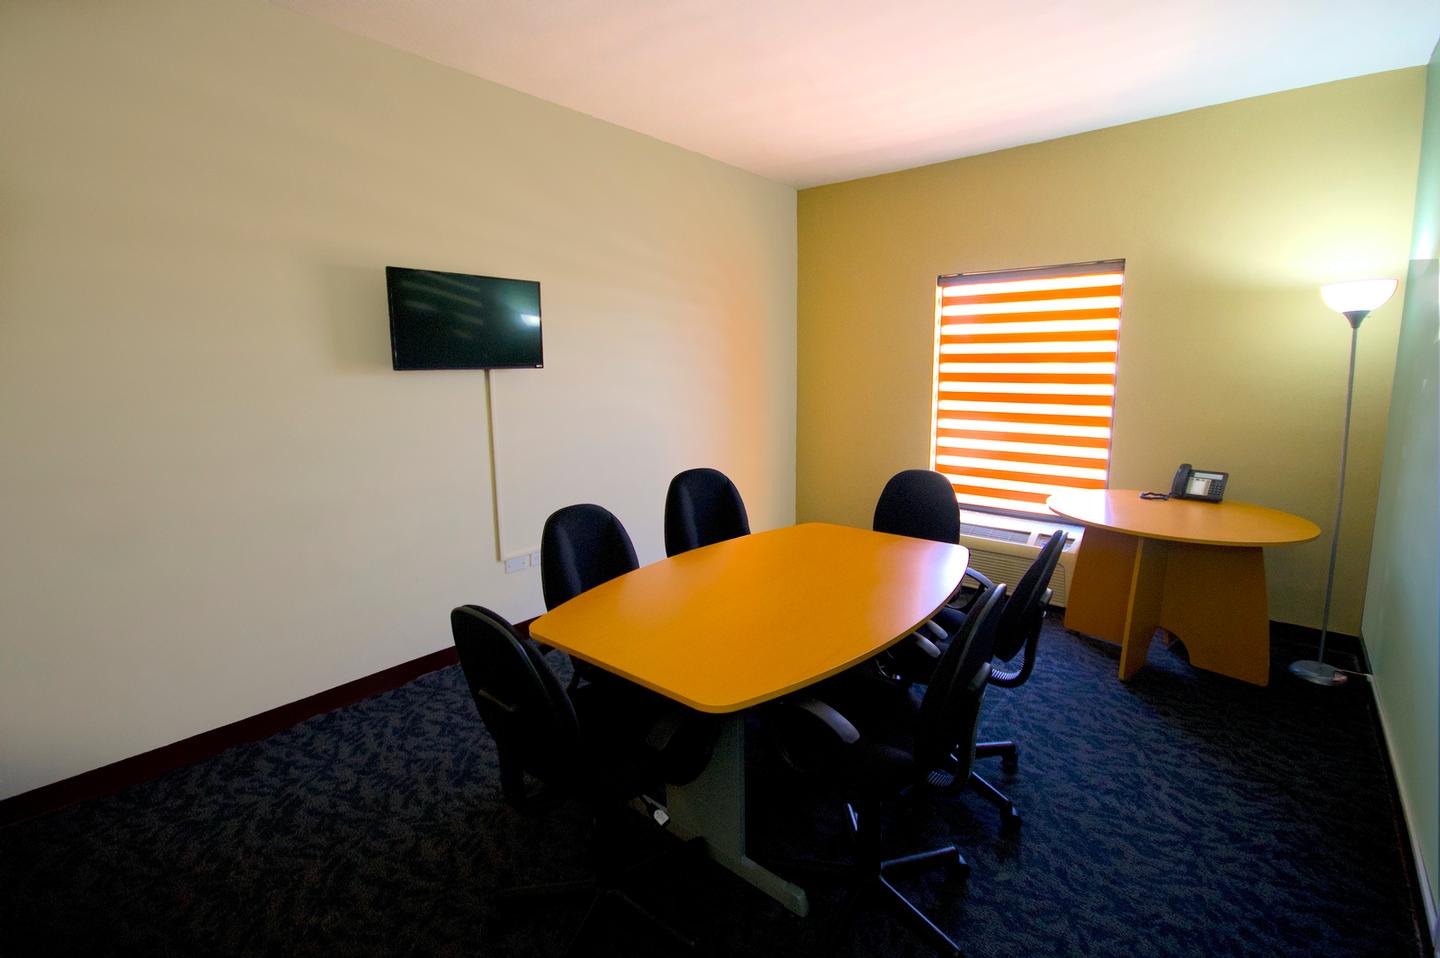 Photo of Main Meeting Room